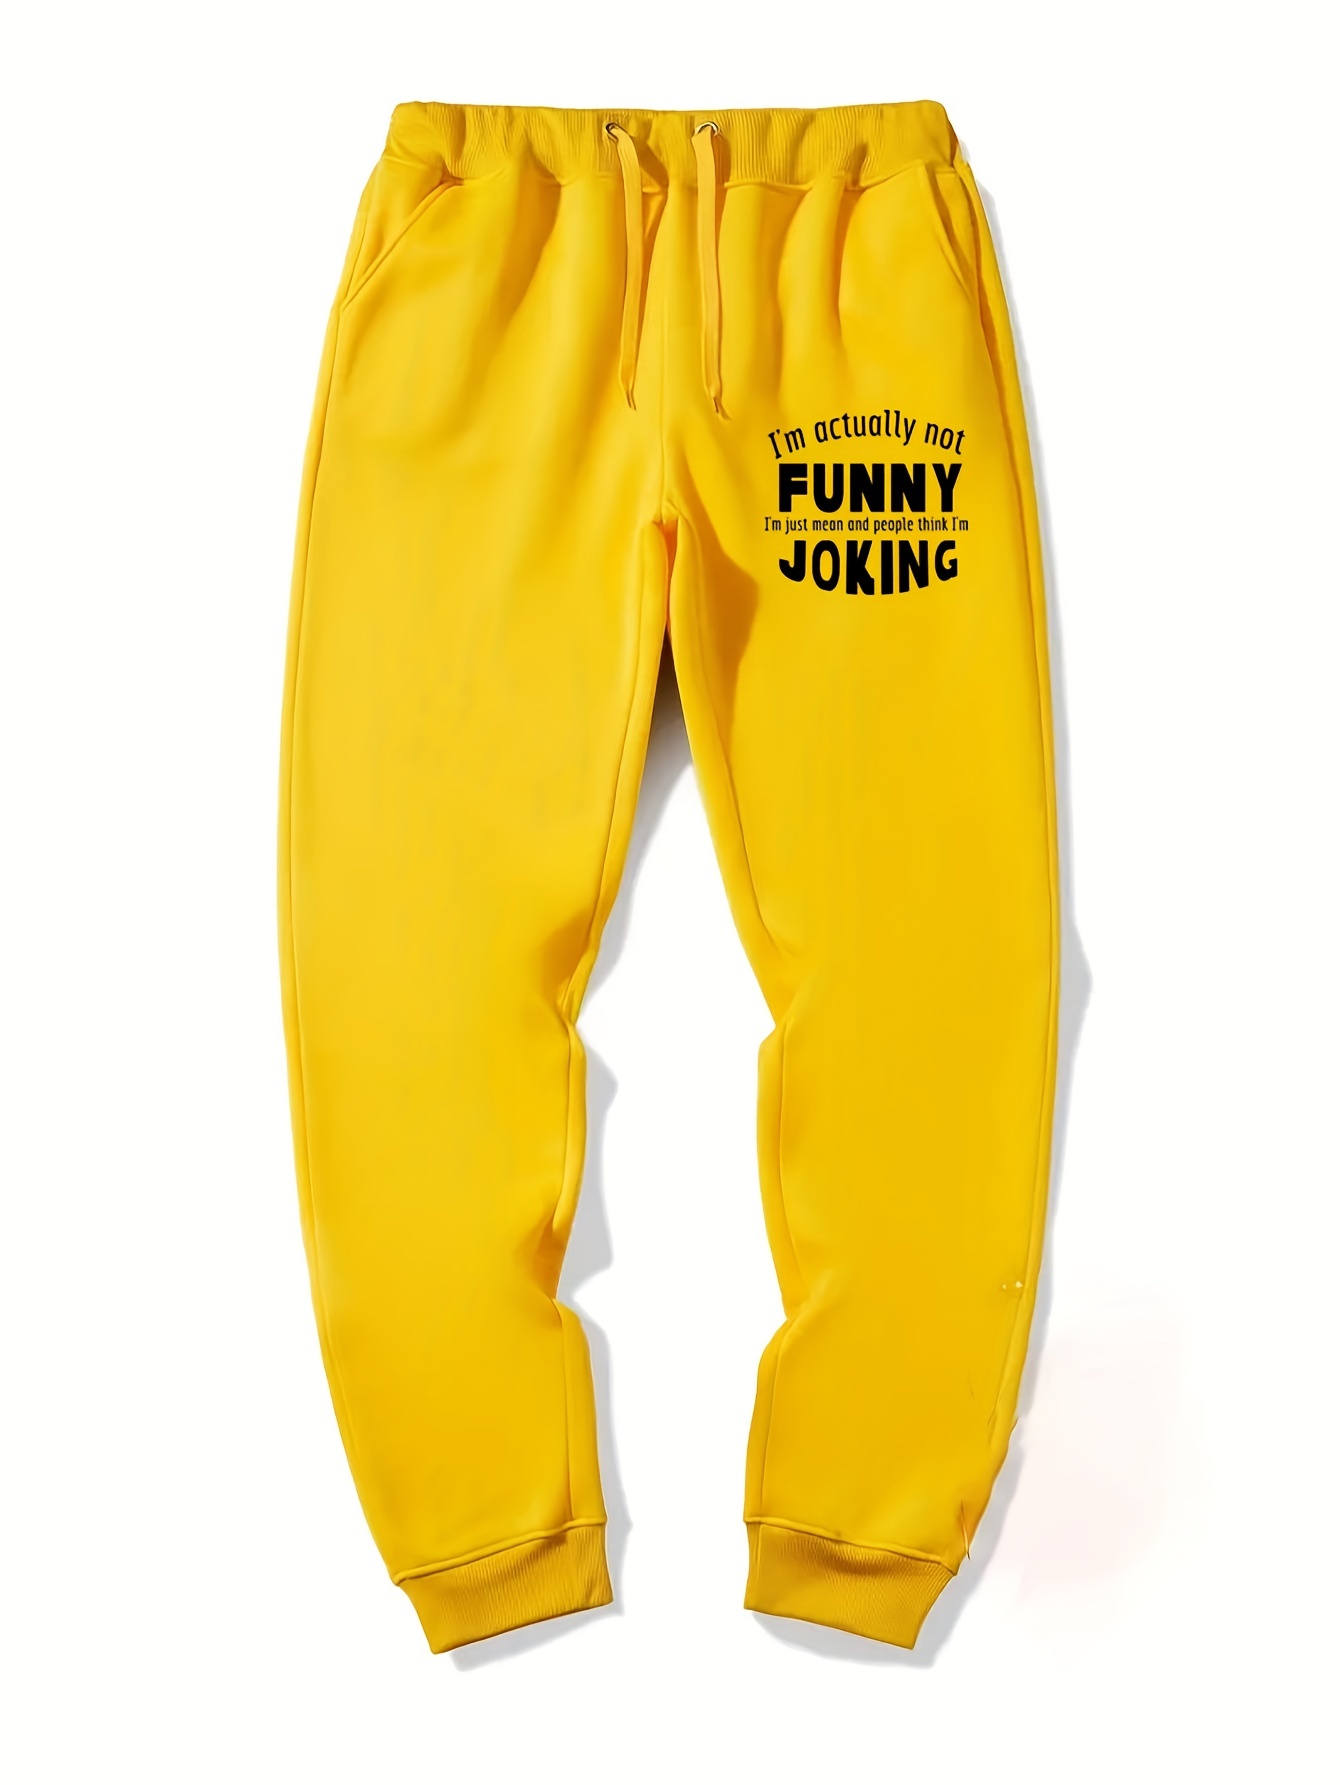  Funny Pants